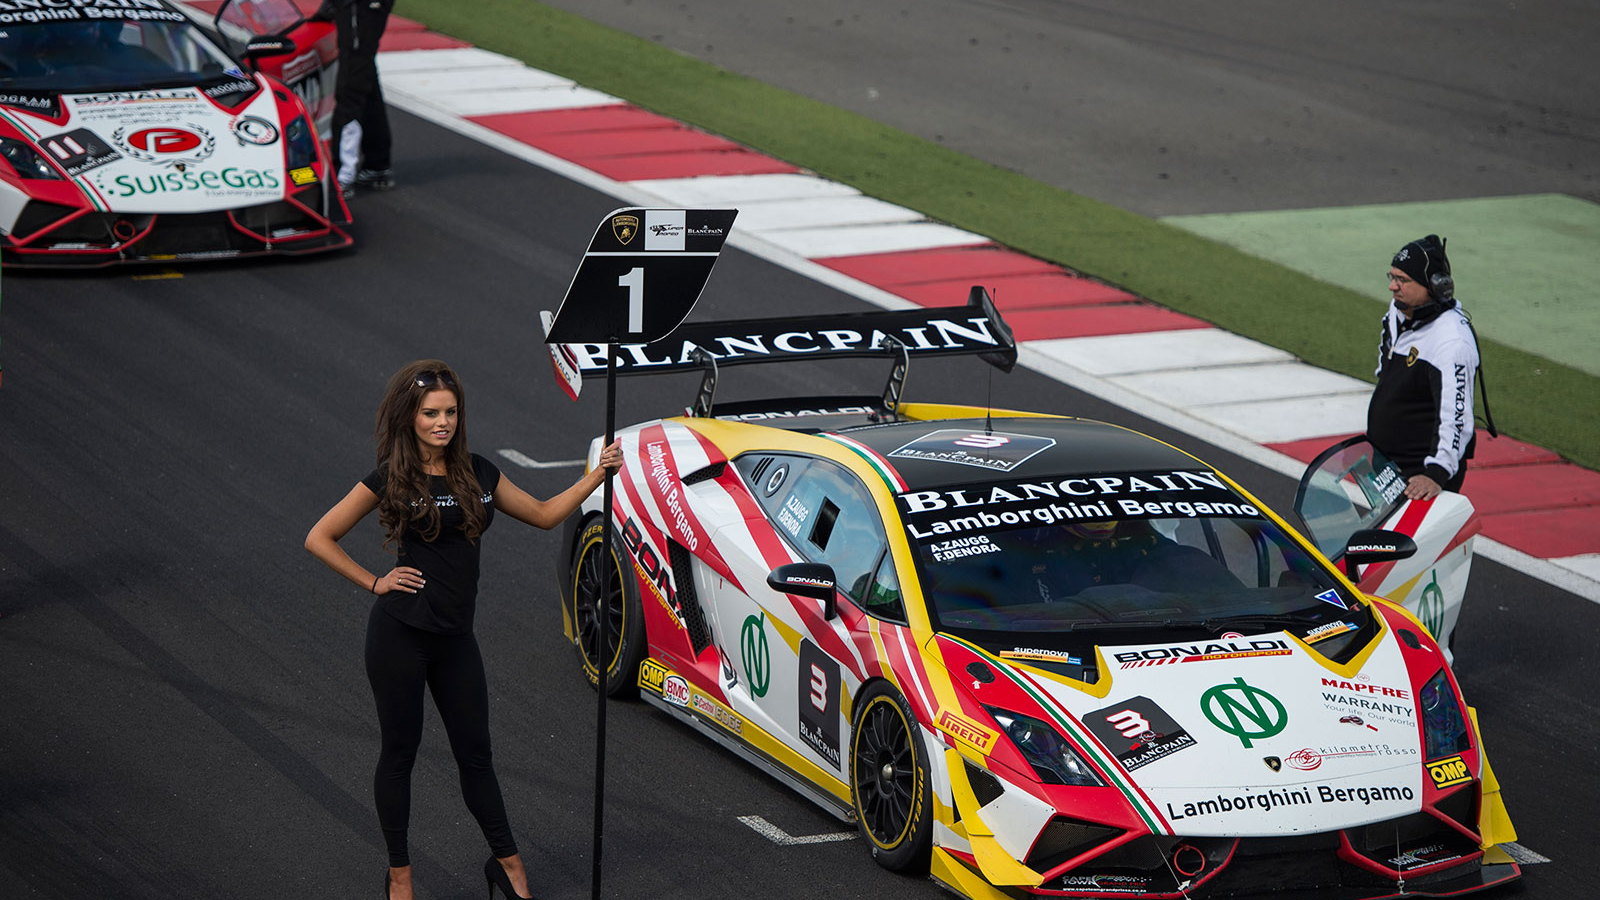 2013 Lamborghini Blancpain Super Trofeo action